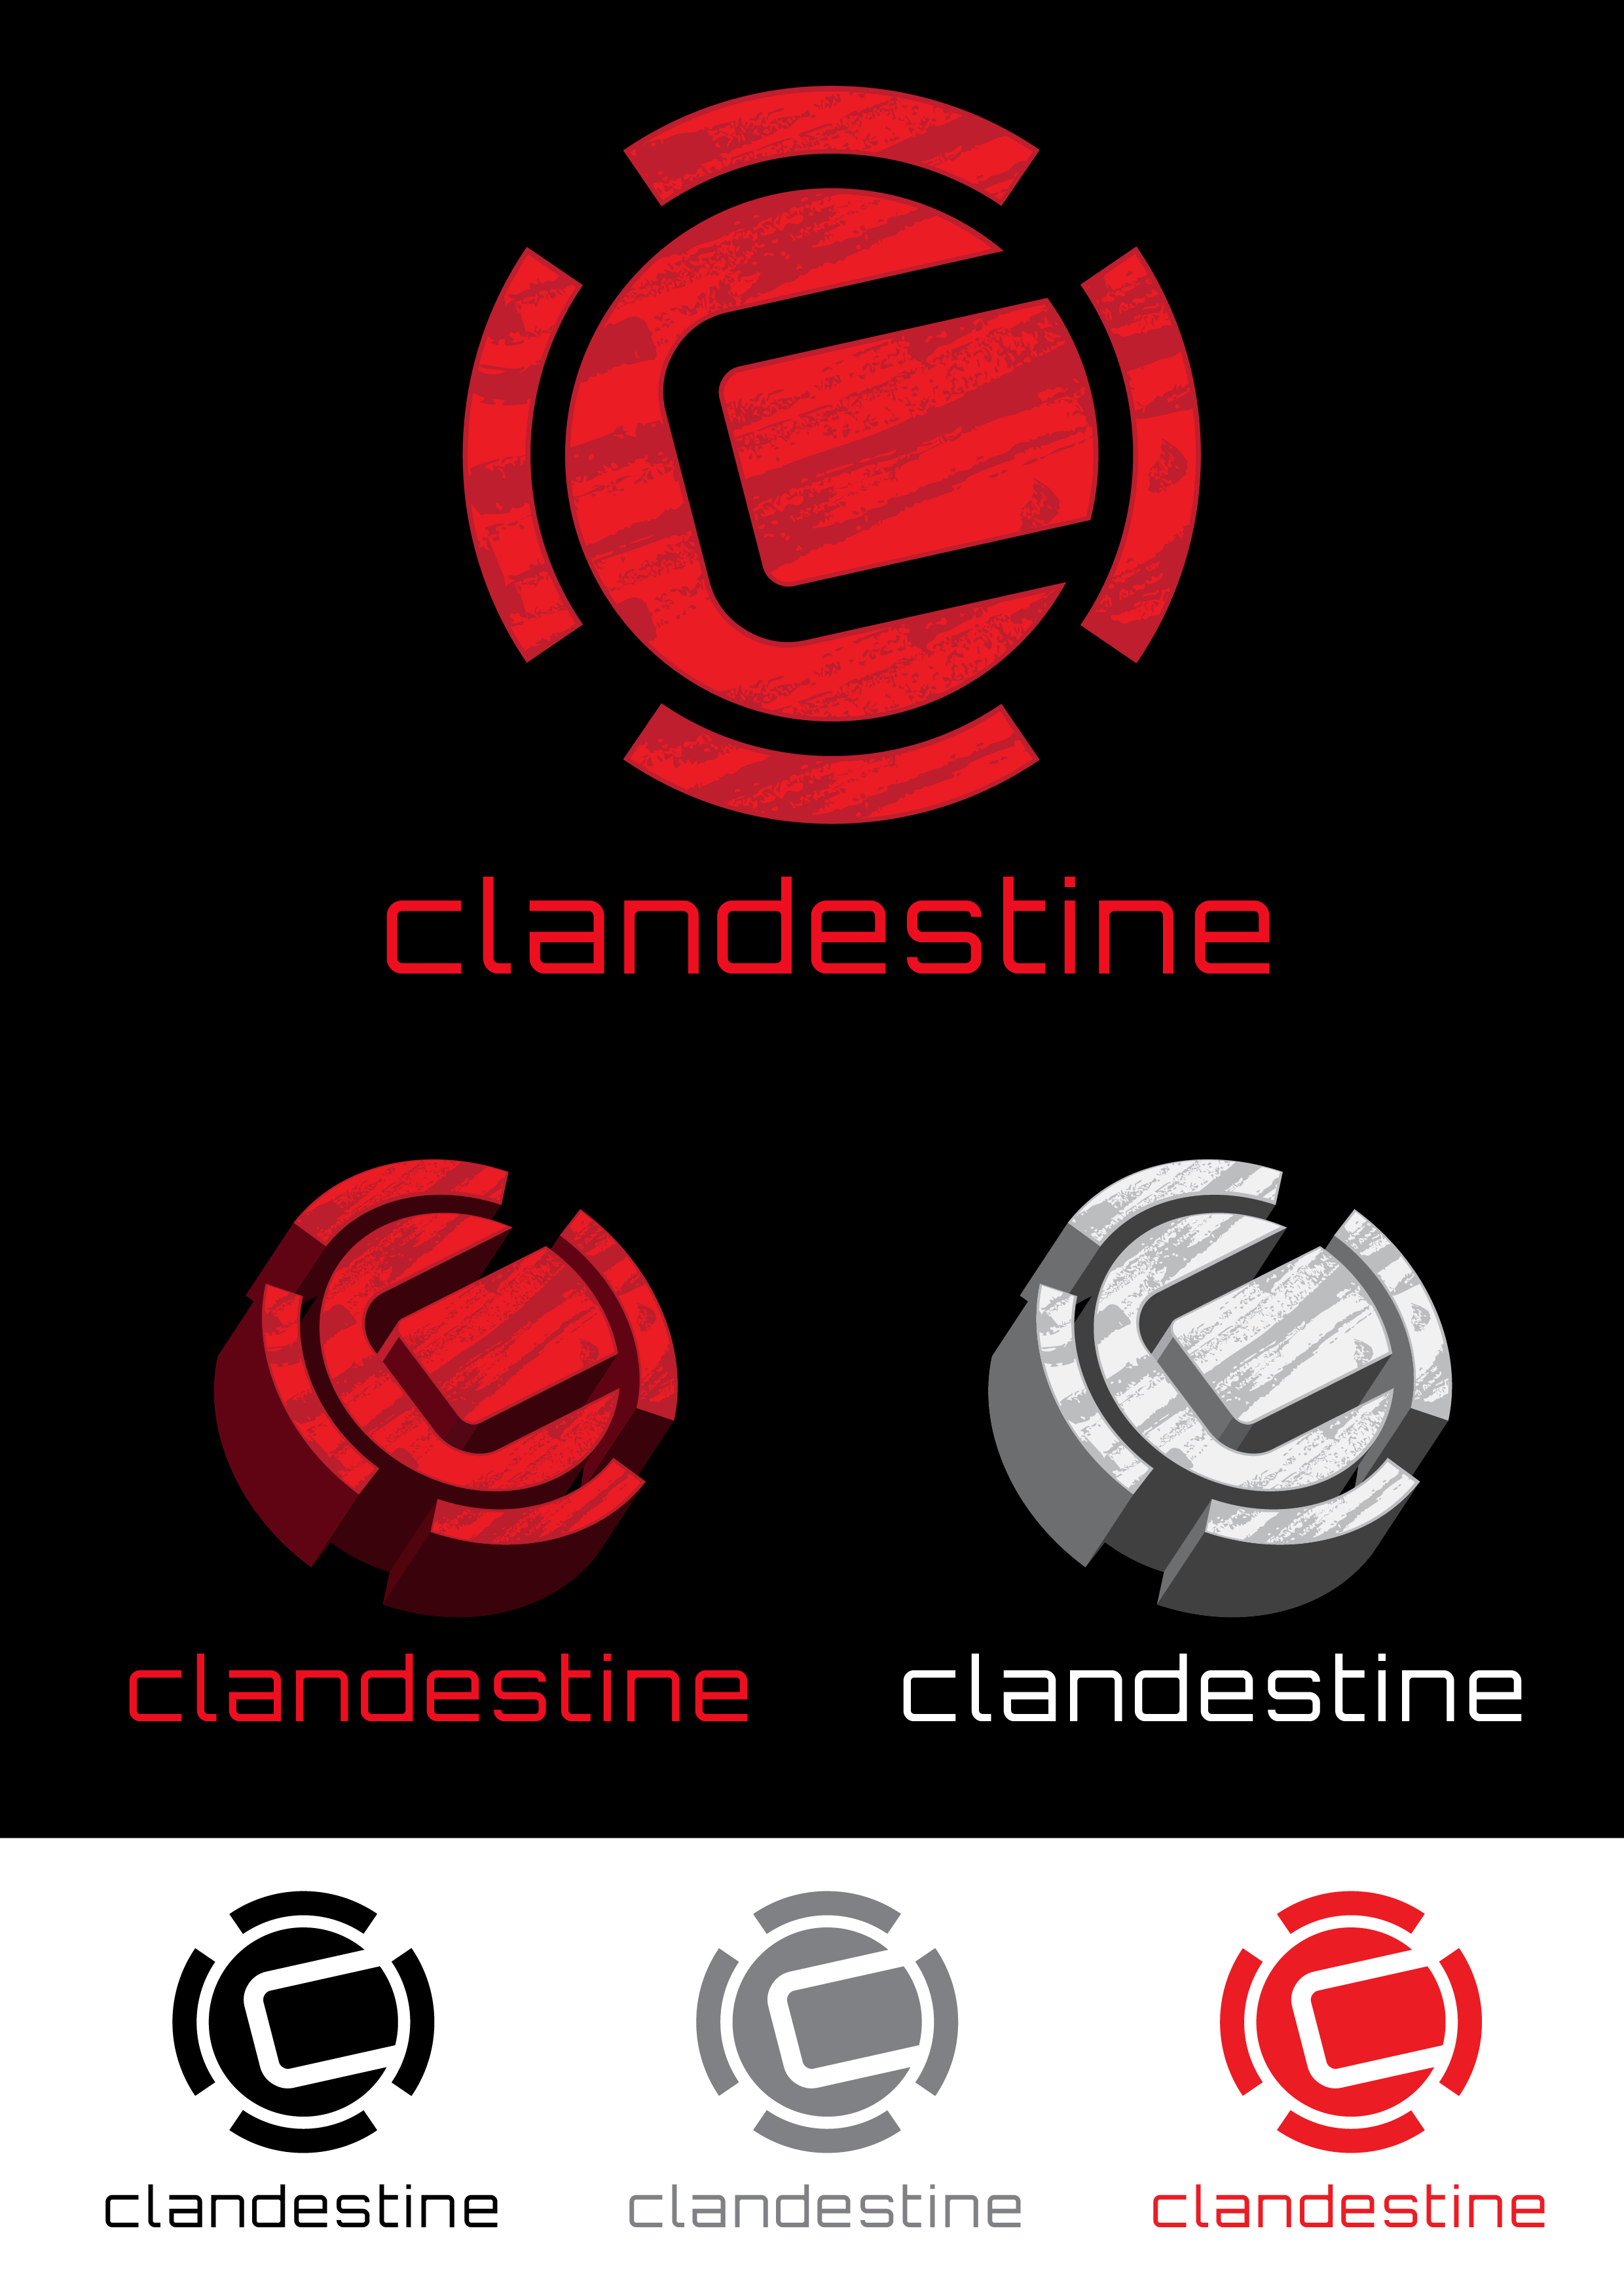 Clandestine logo1.png